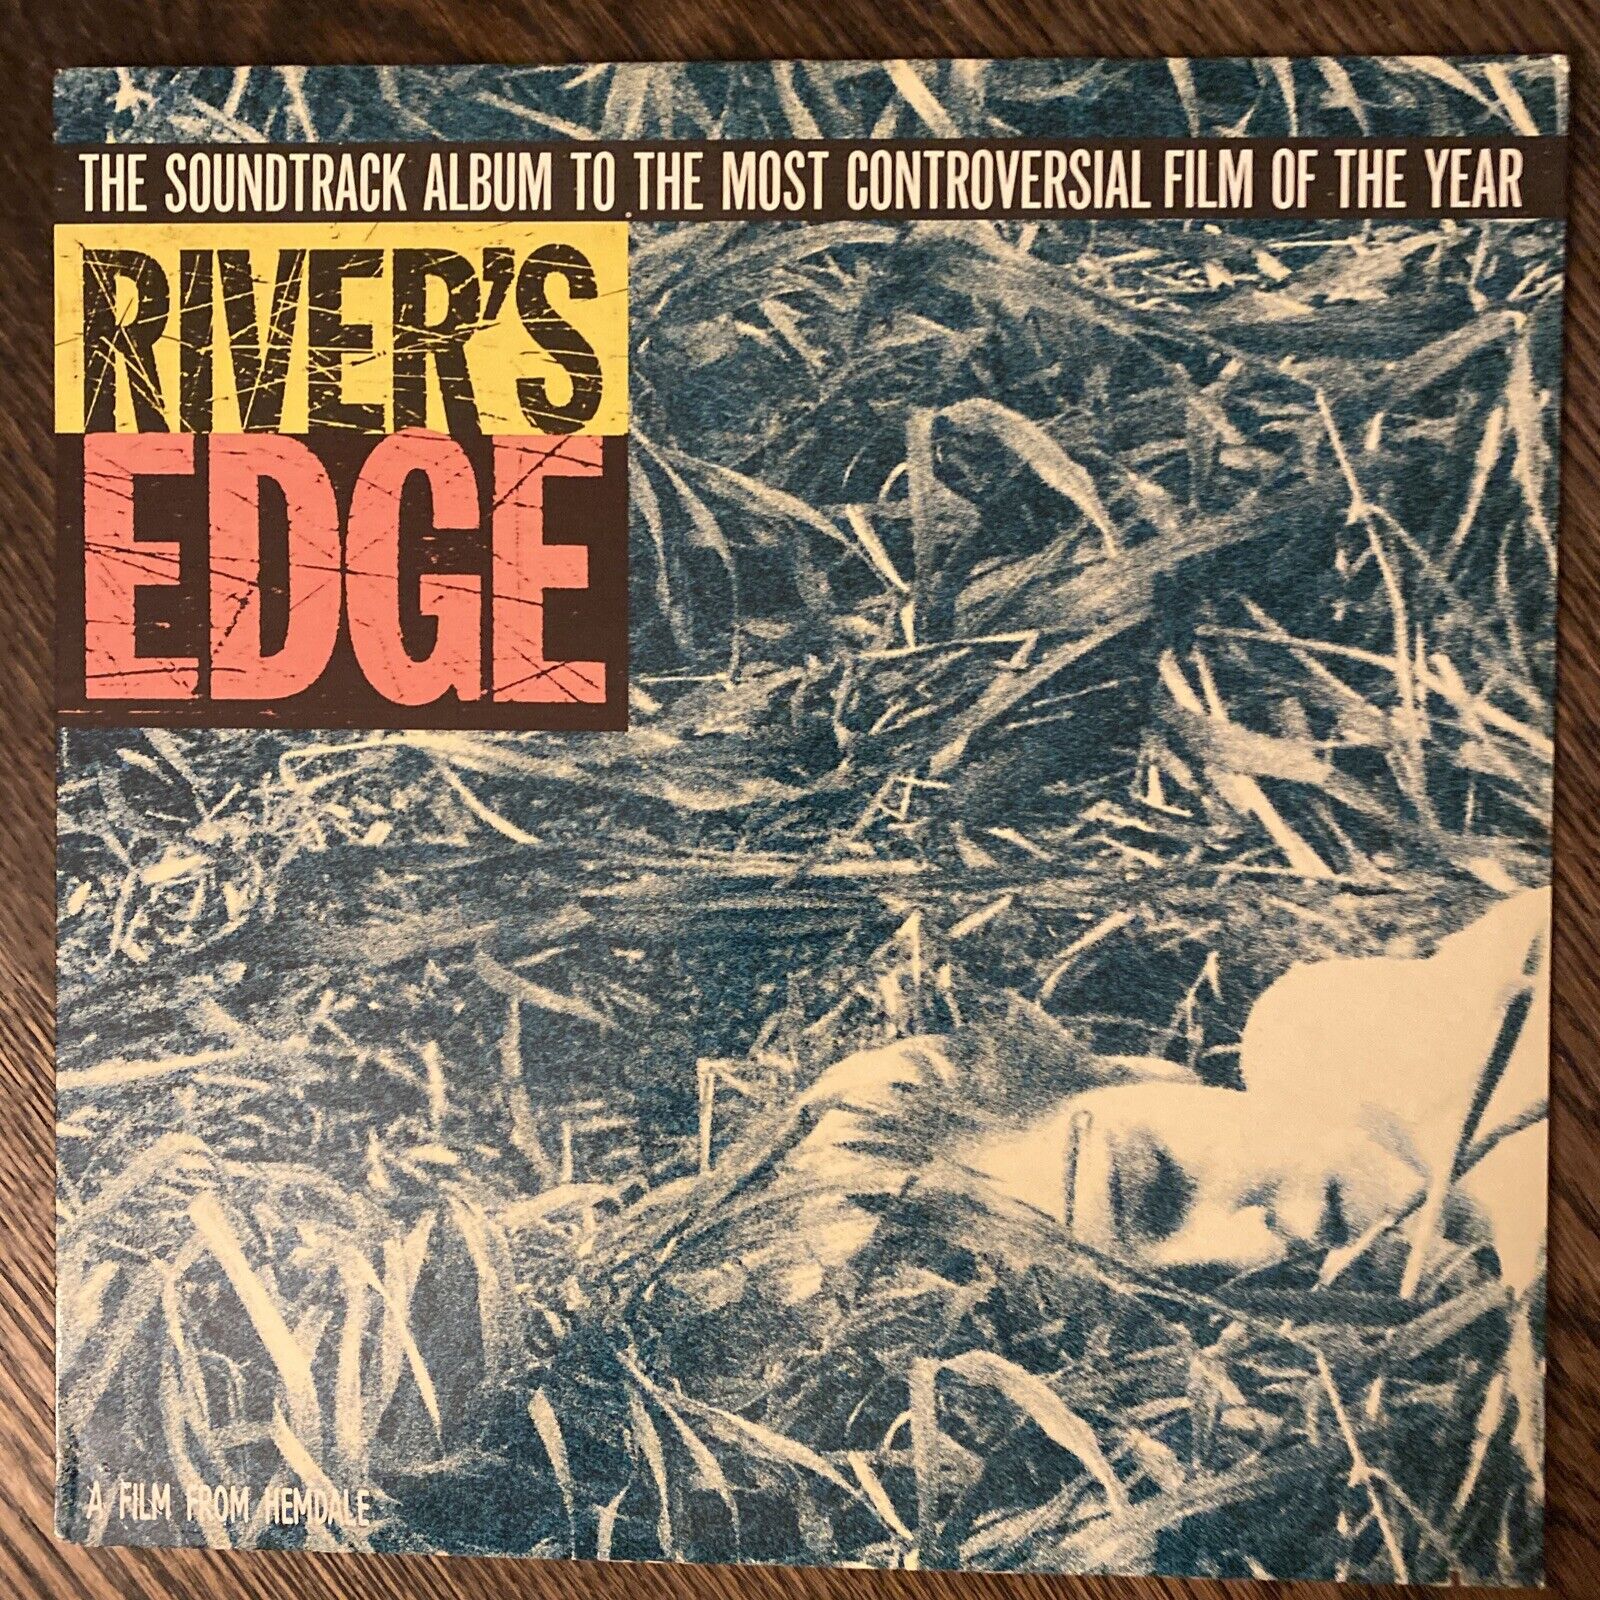 River’s Edge Soundtrack Slayer Vinyl LP Orig Enigma Record VG++